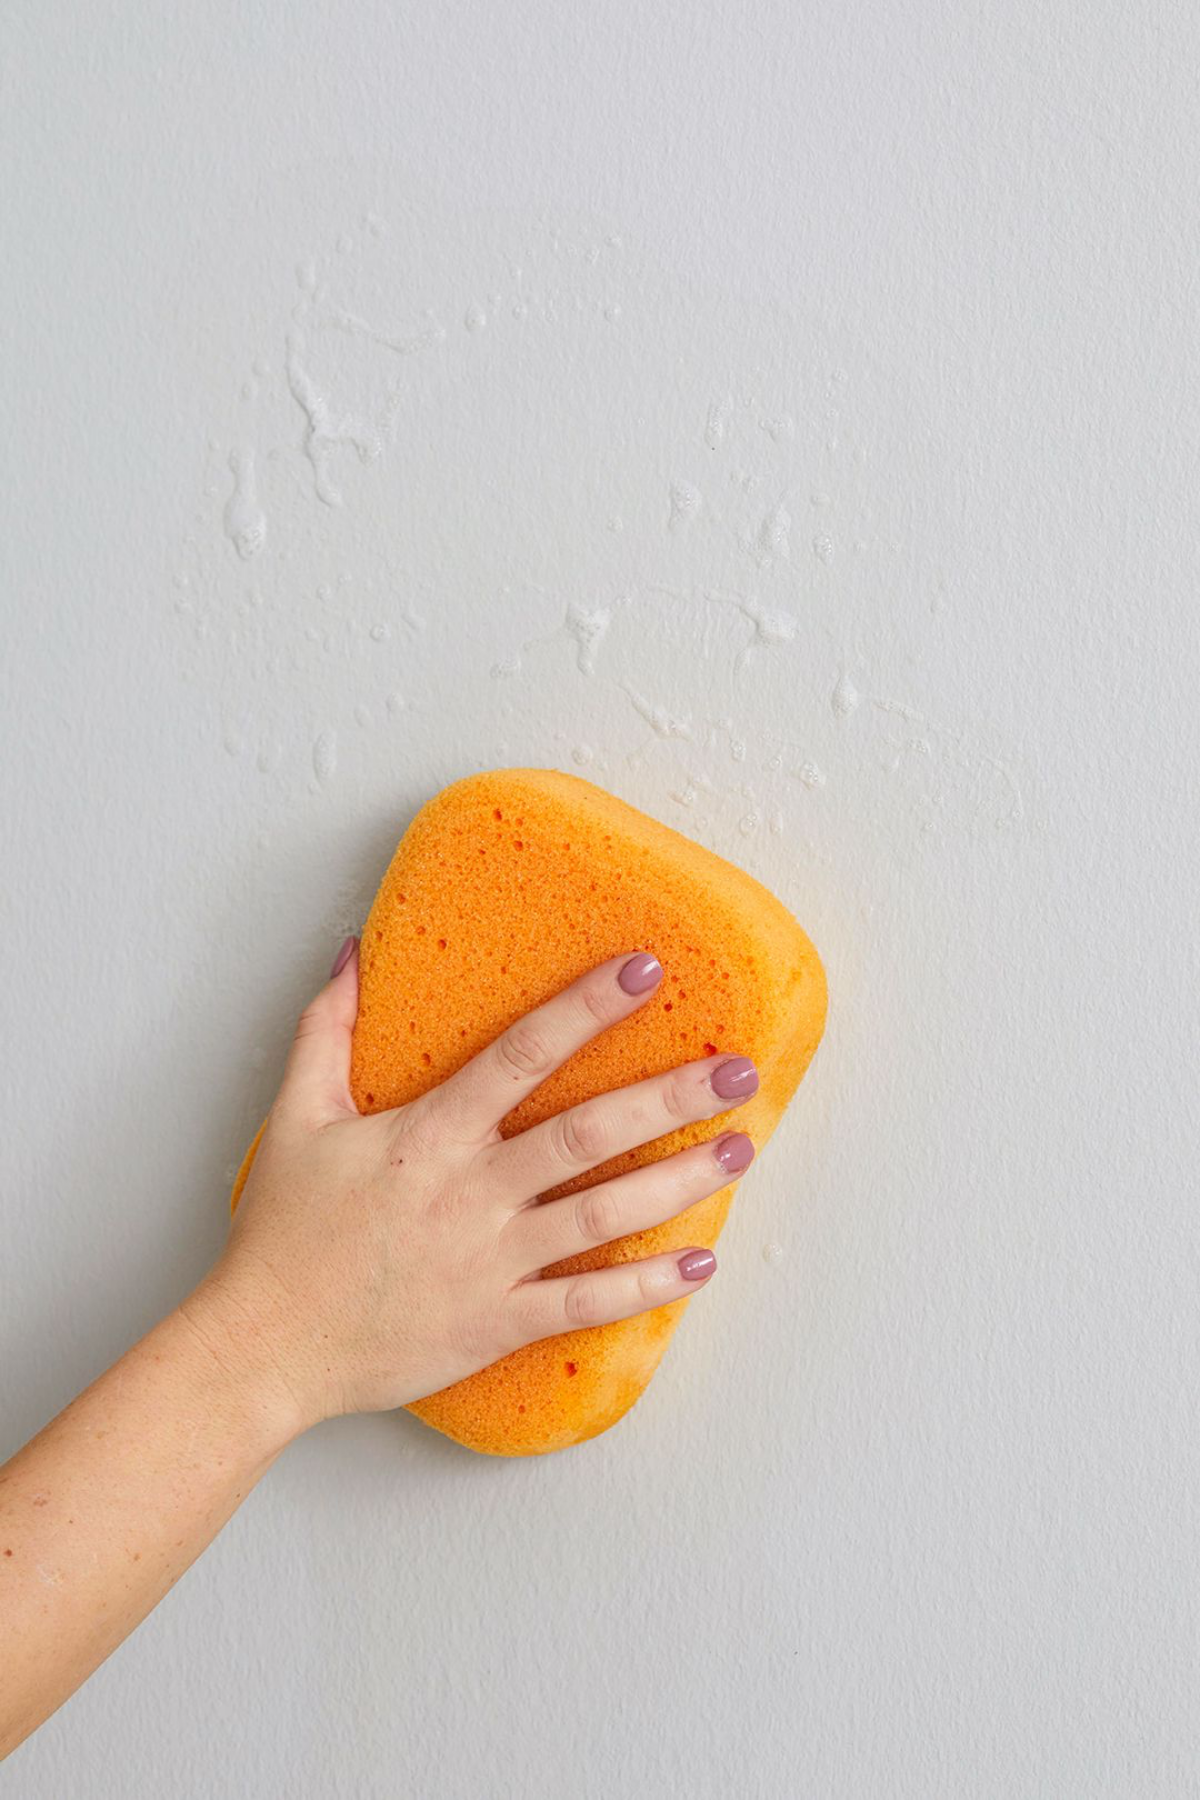 scrubbing walls with sponge